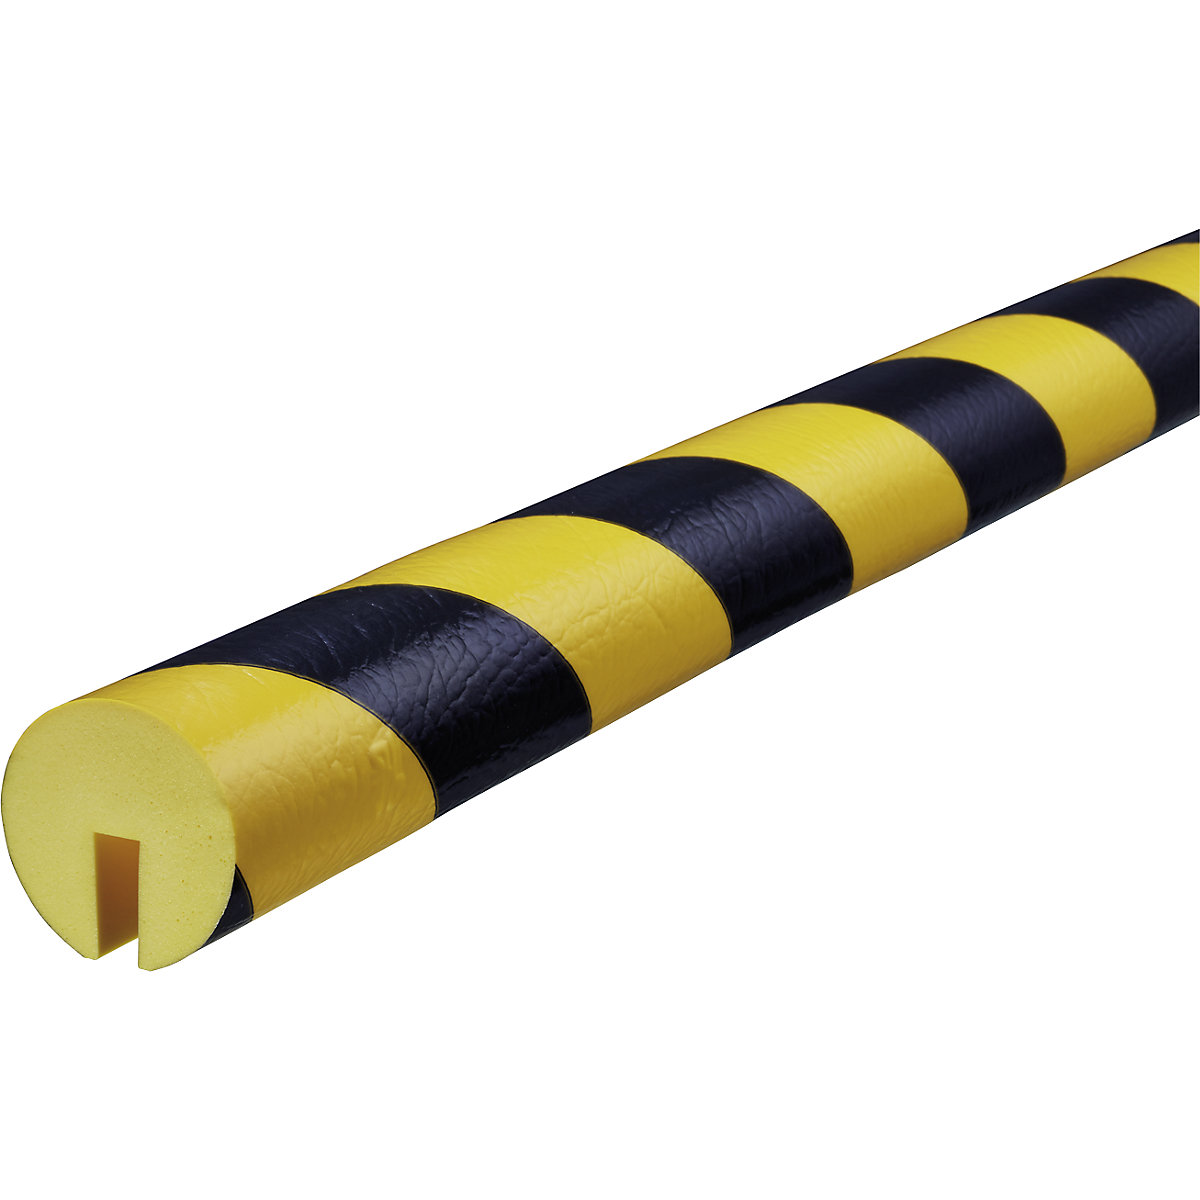 Proteção de rebordos Knuffi® – SHG, tipo B, corte individual, por metro corrente, preto/amarelo-20